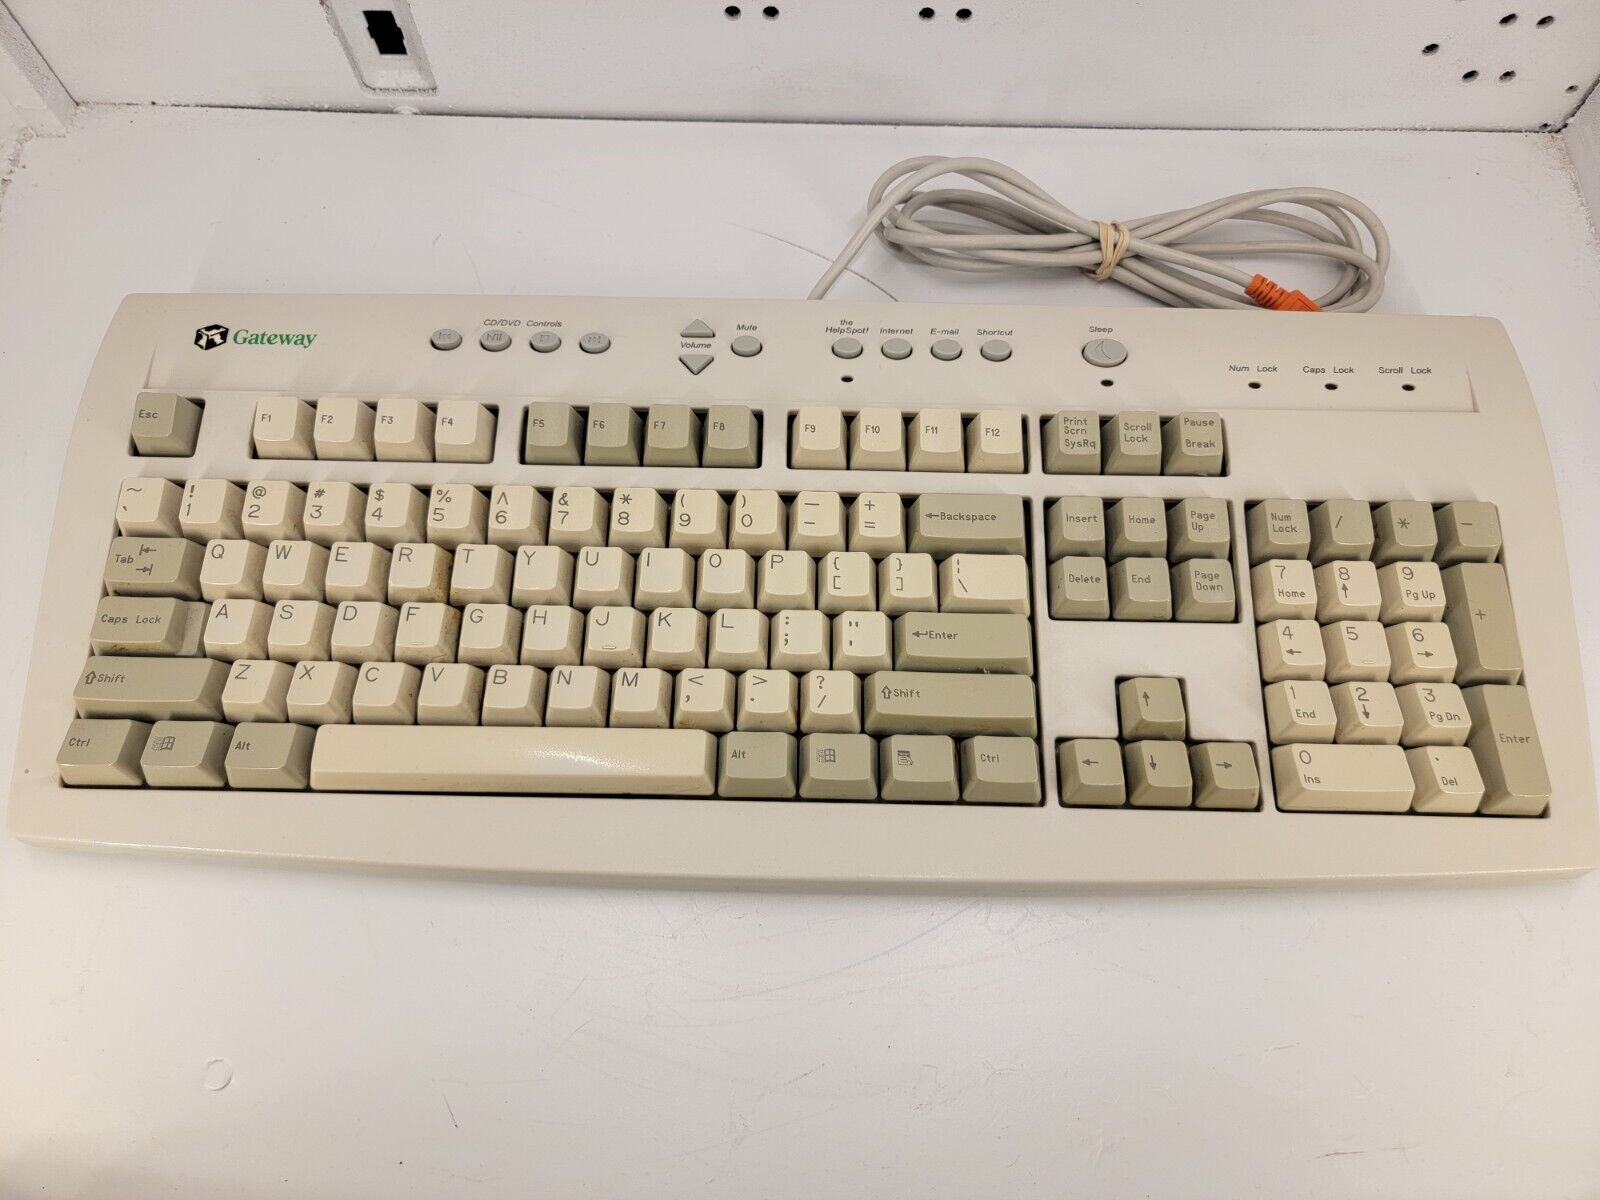 Vintage Gateway Computer PC Keyboard 7001211 - TESTED WORKS GREAT